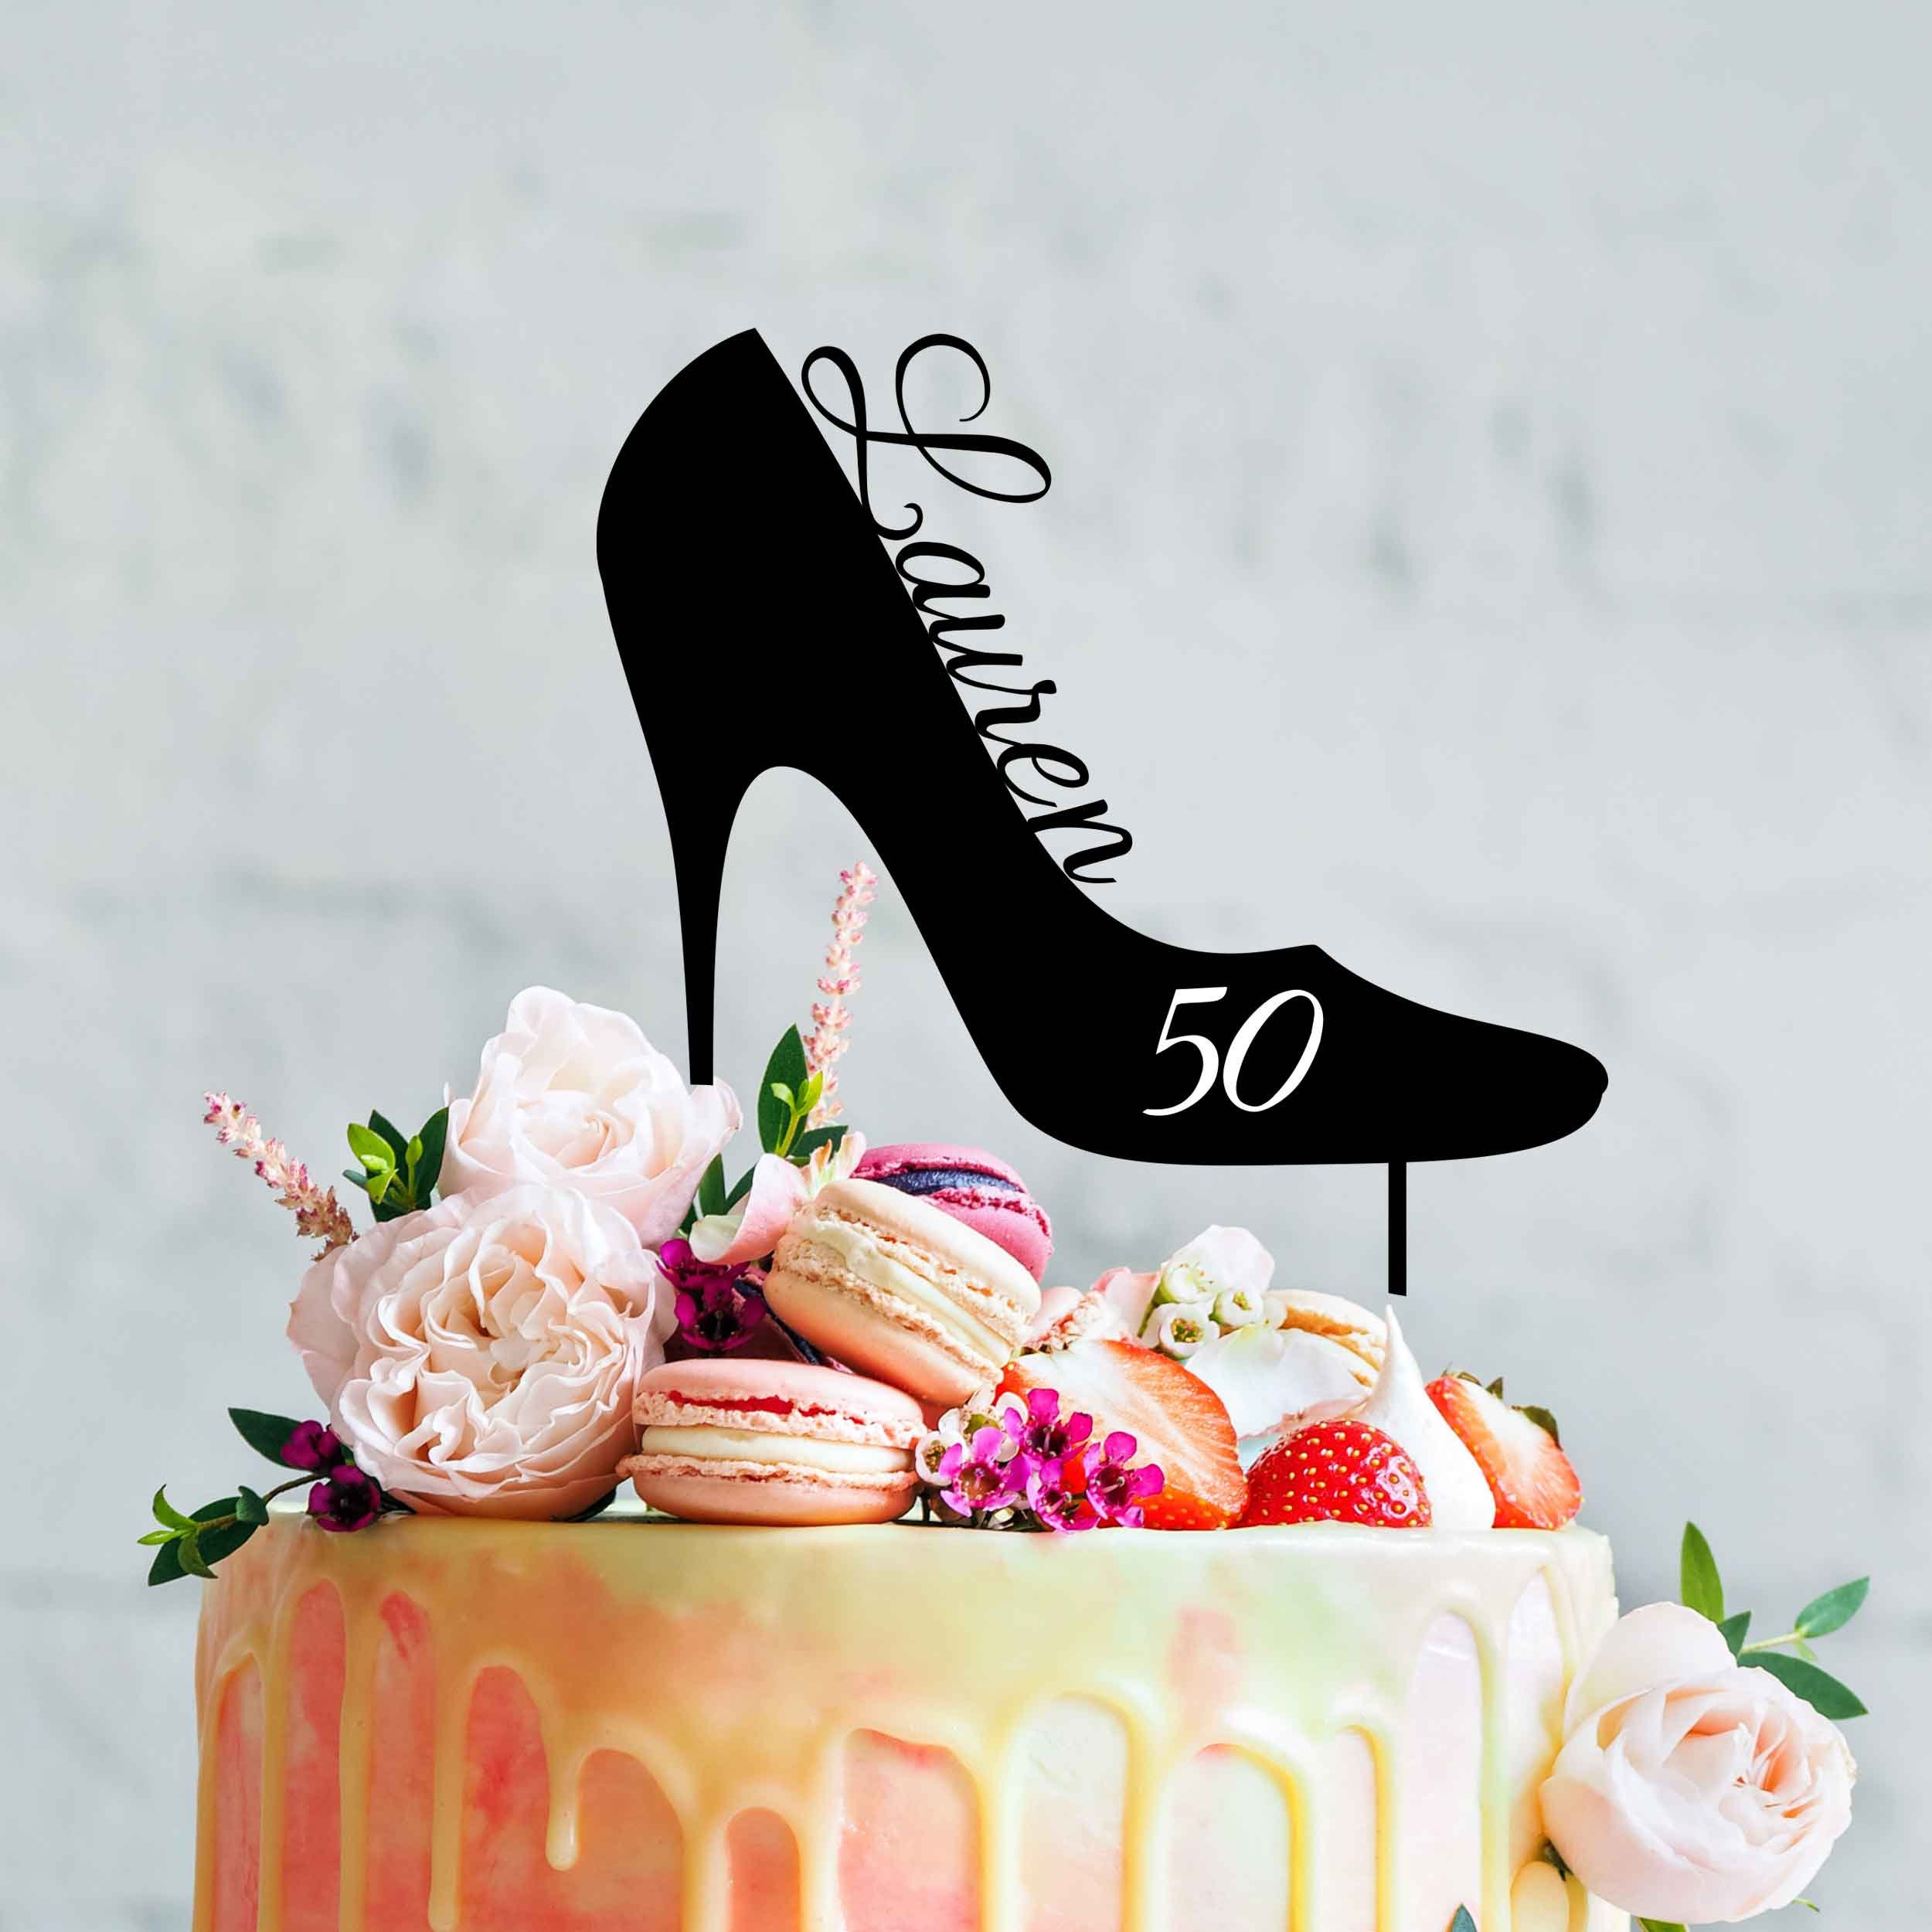 Makeup High heel shoe cake - Decorated Cake by Sugar Tree - CakesDecor